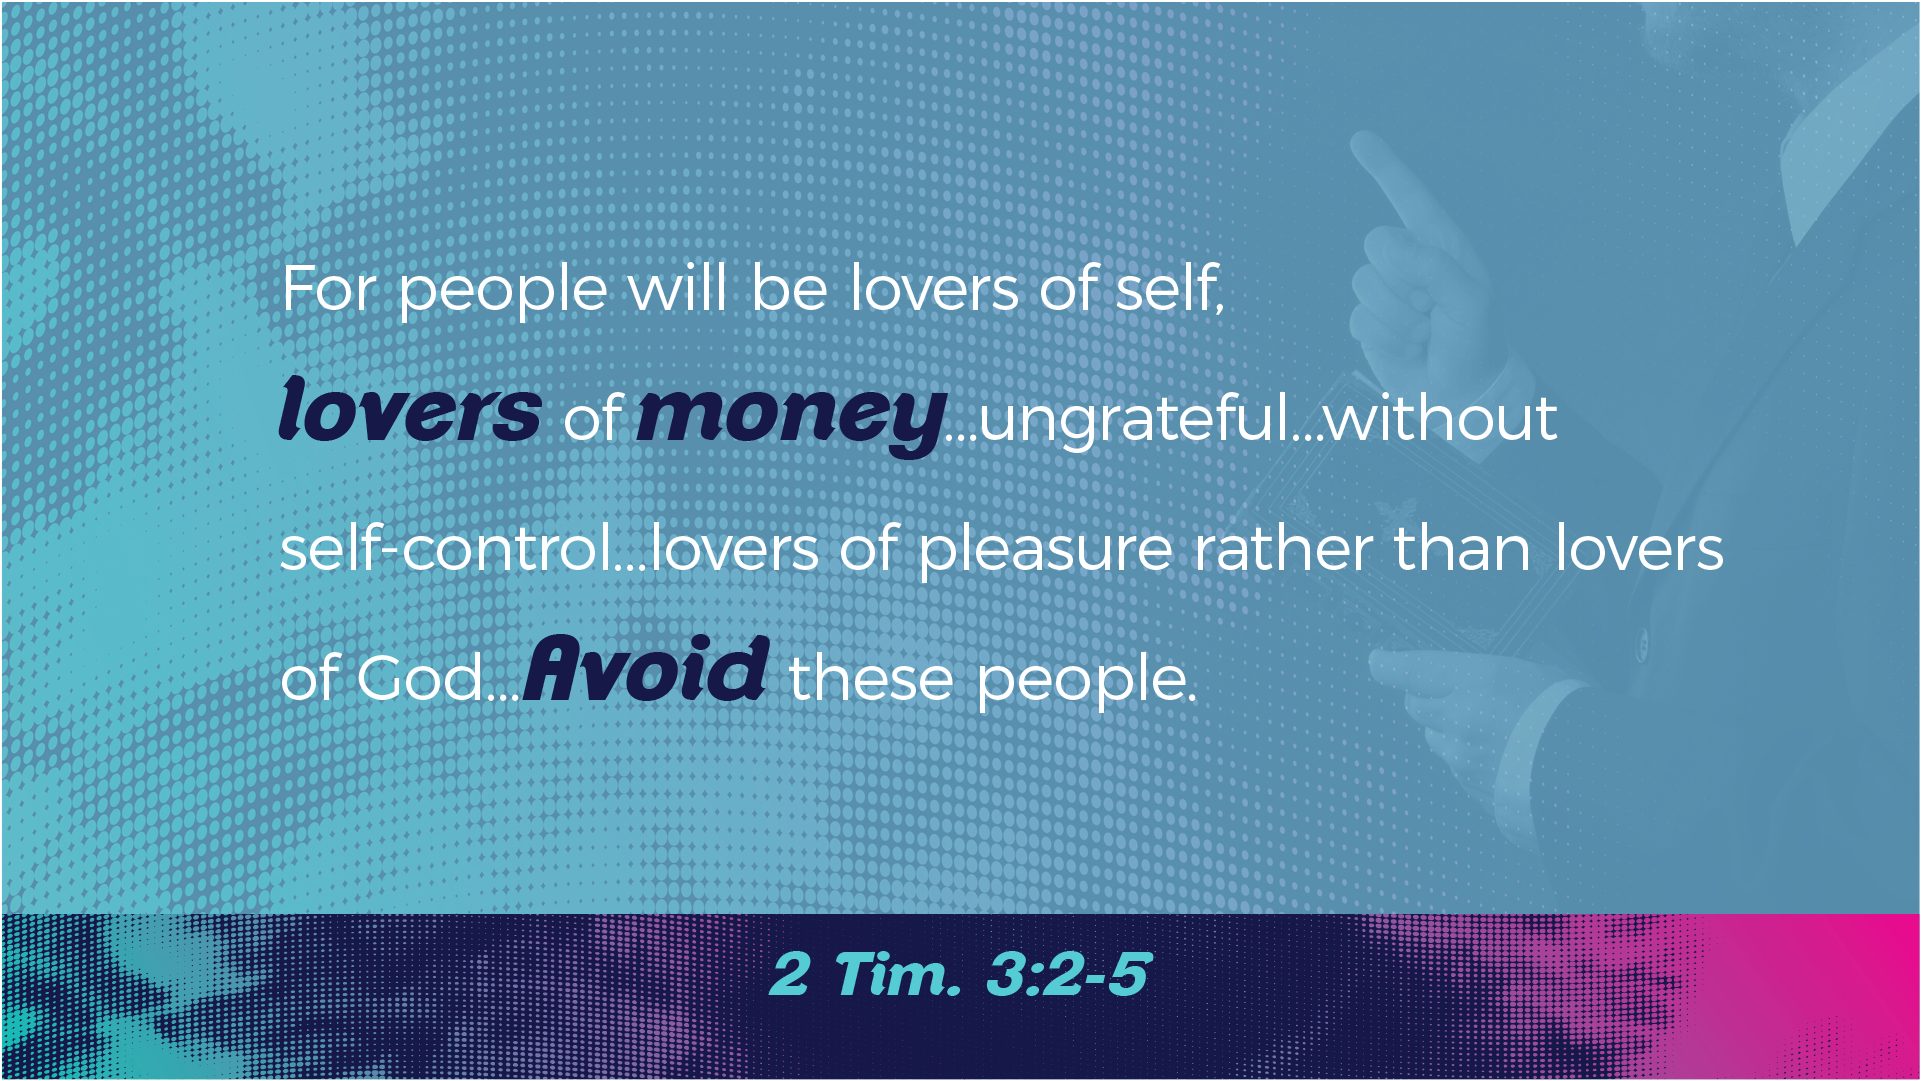 Paul on Wealth - 2 Tim. 3:2-5